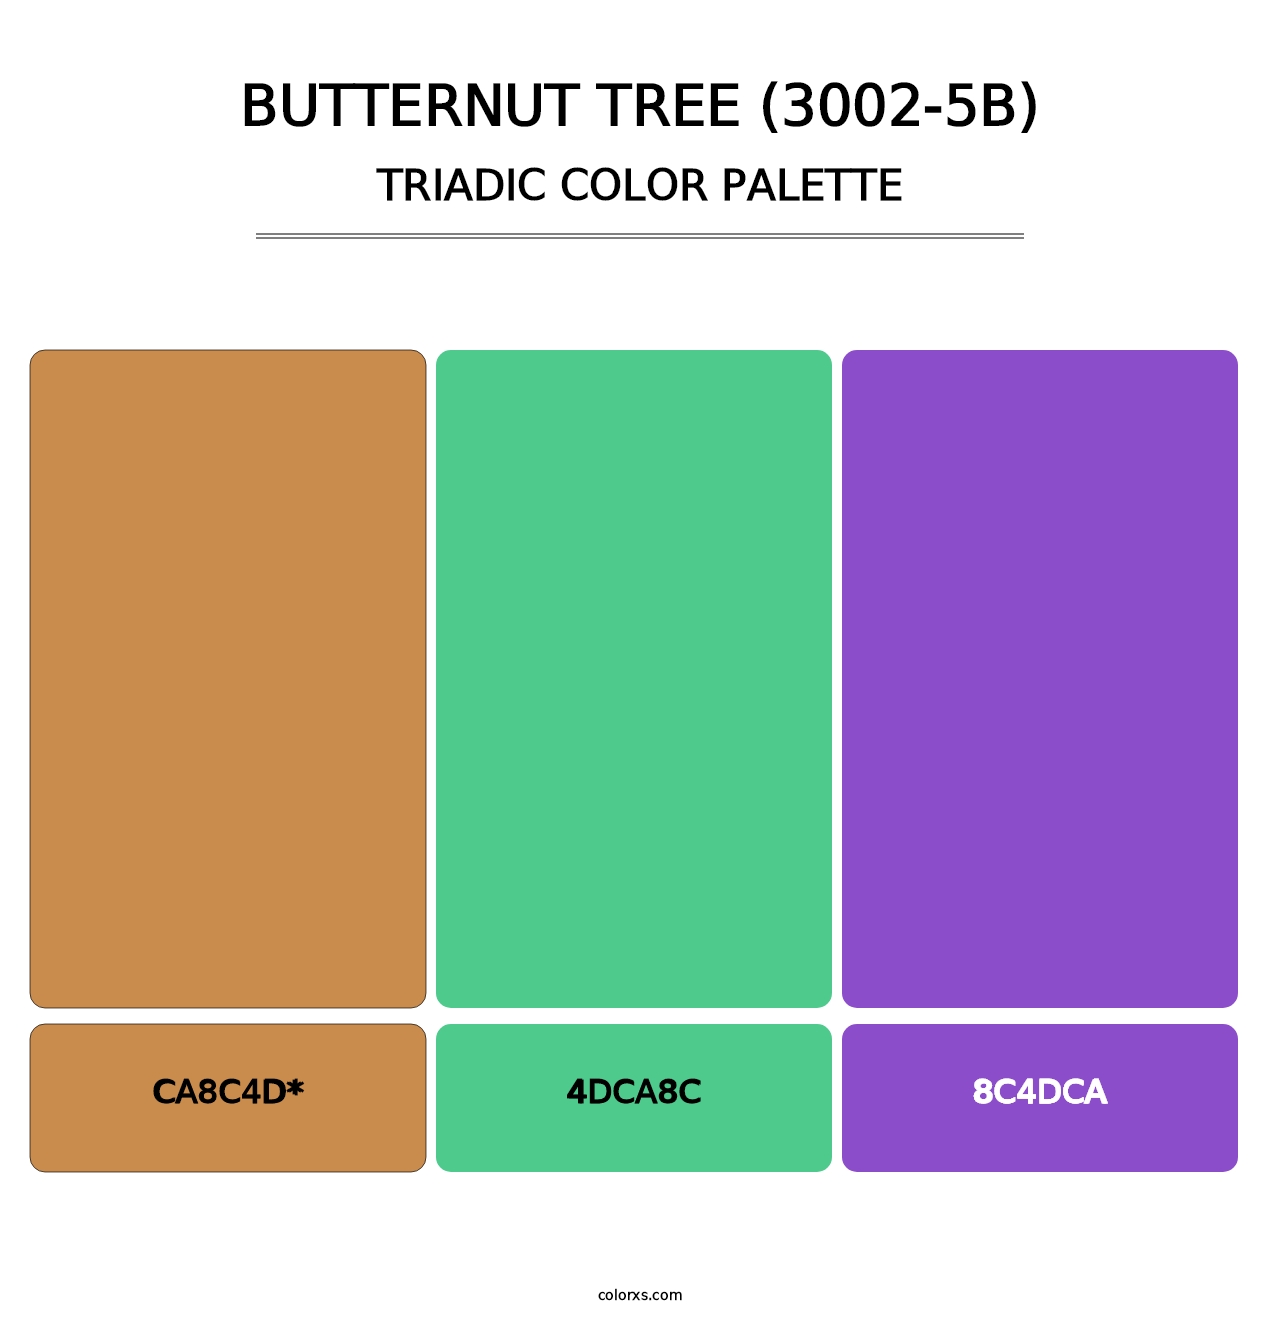 Butternut Tree (3002-5B) - Triadic Color Palette